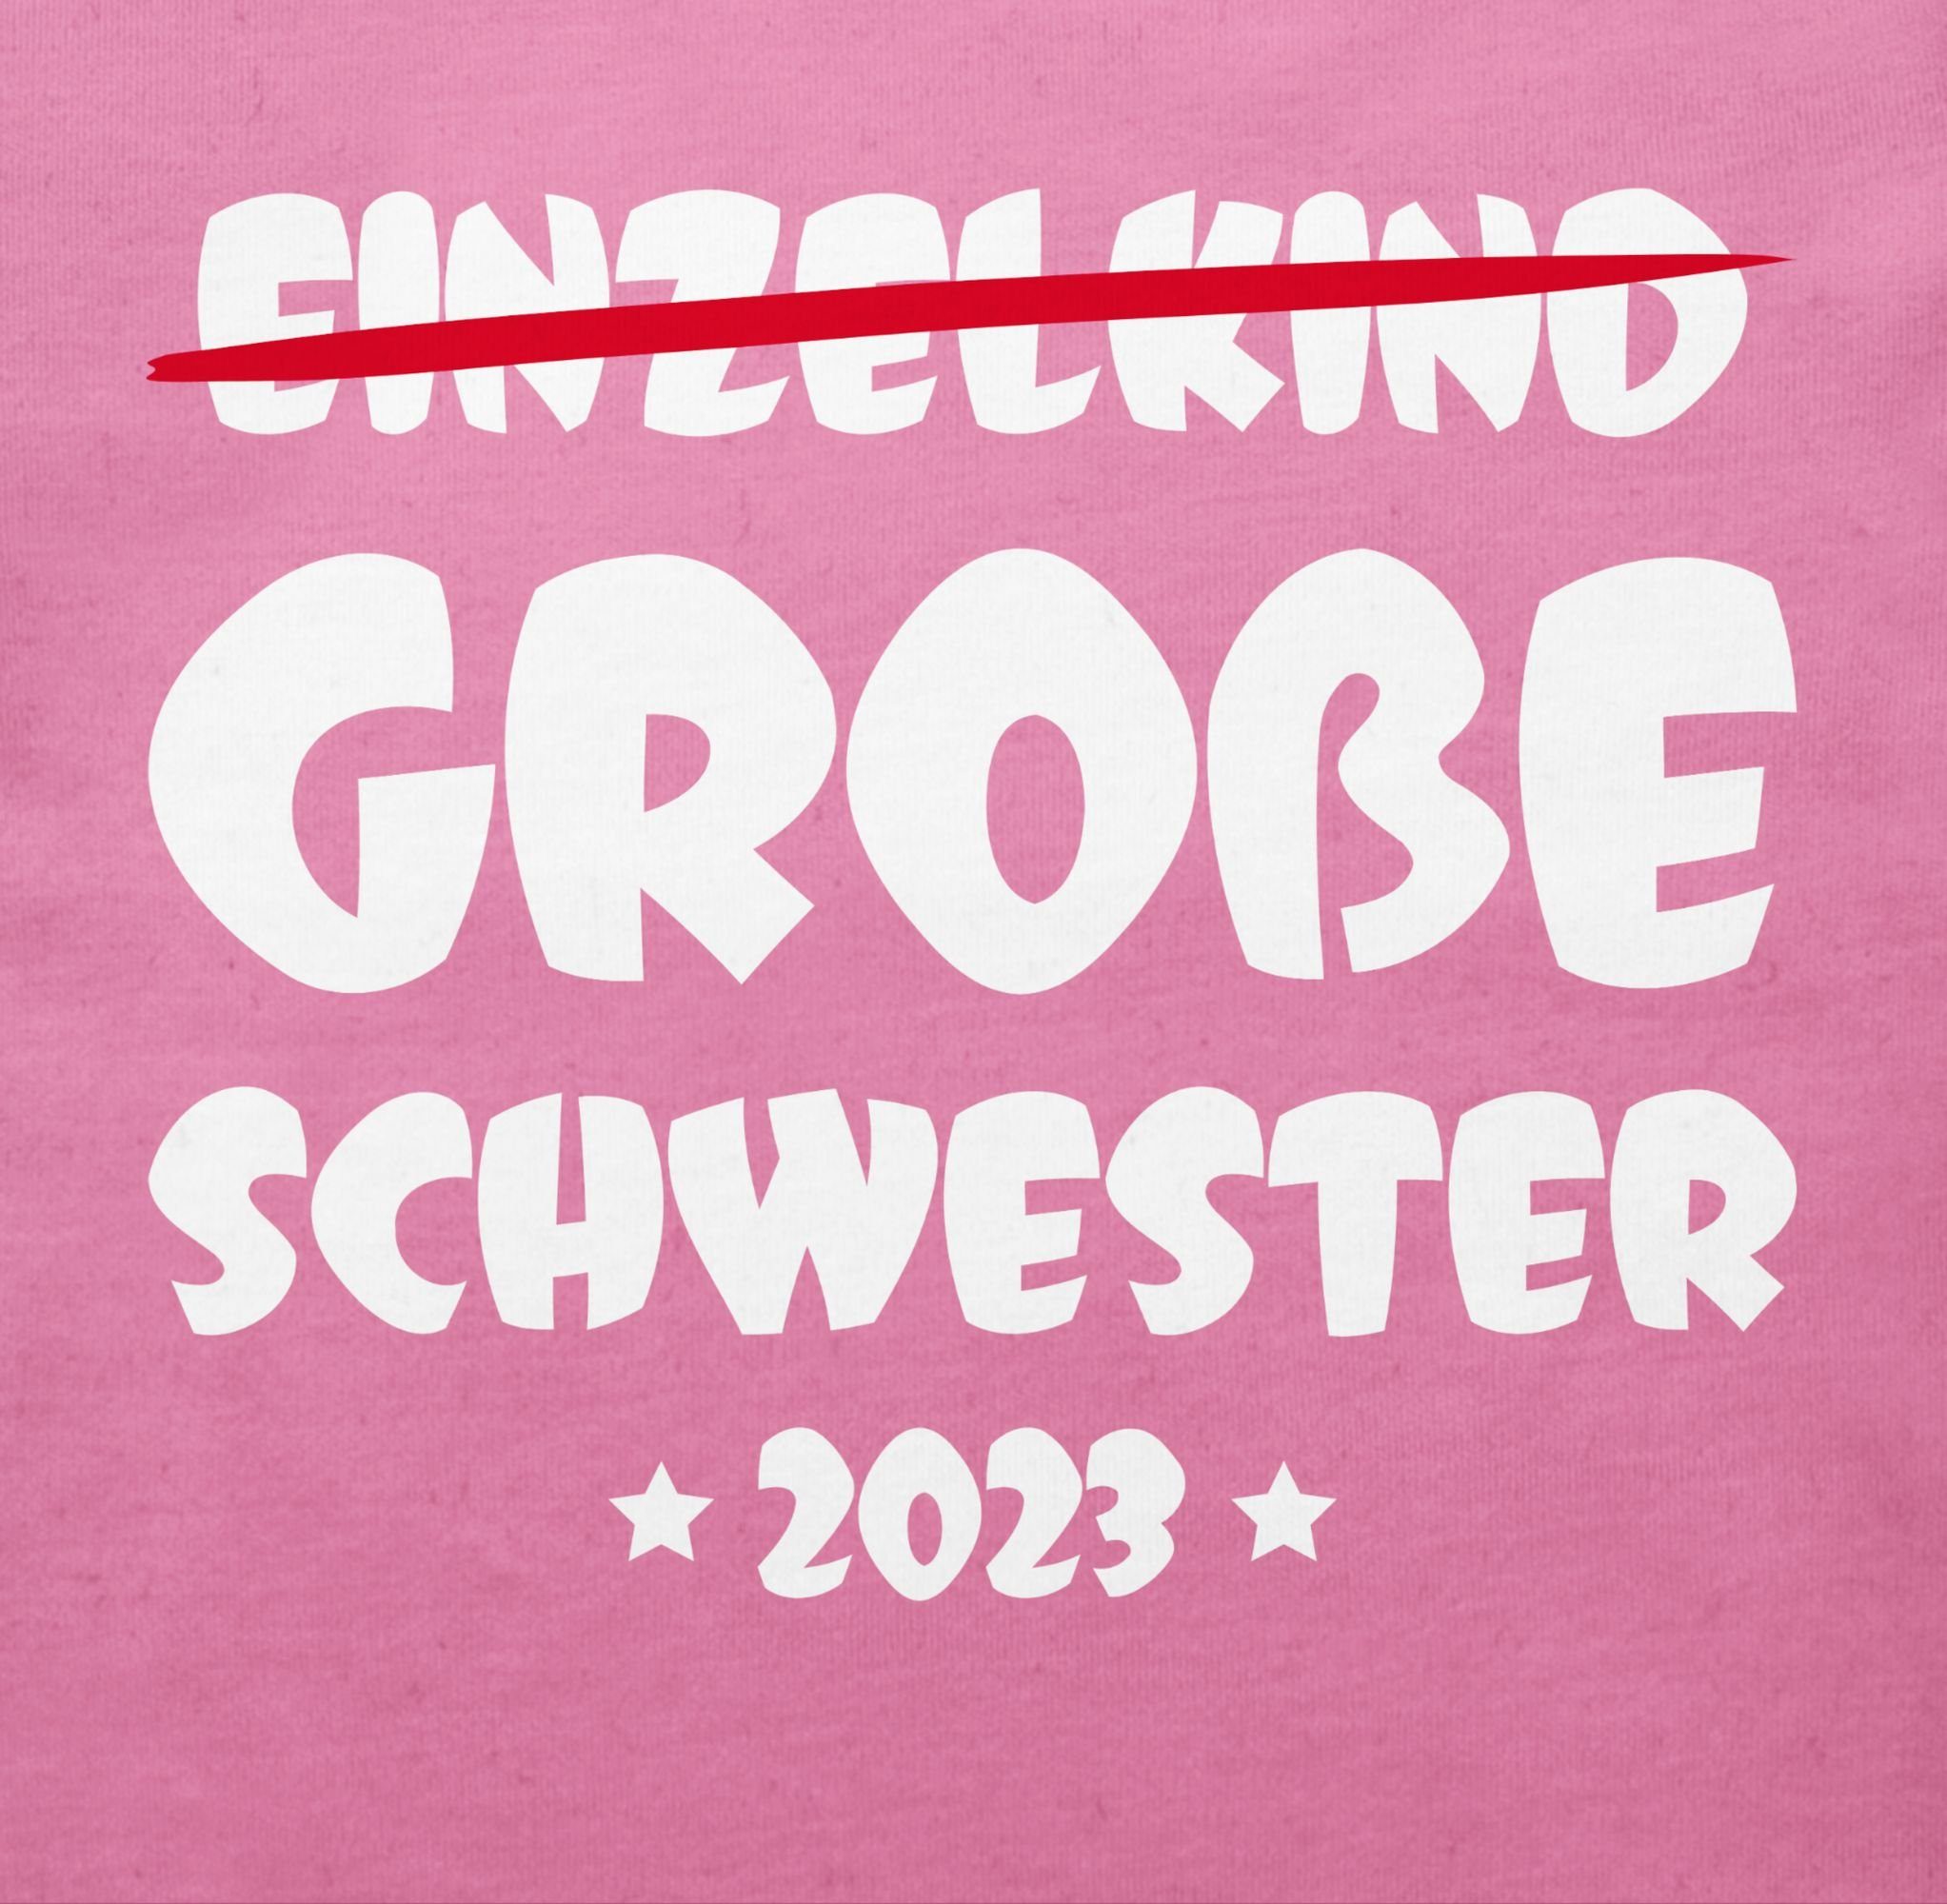 Shirtracer T-Shirt Einzelkind Große Schwester Schwester 1 Große 2023 Pink